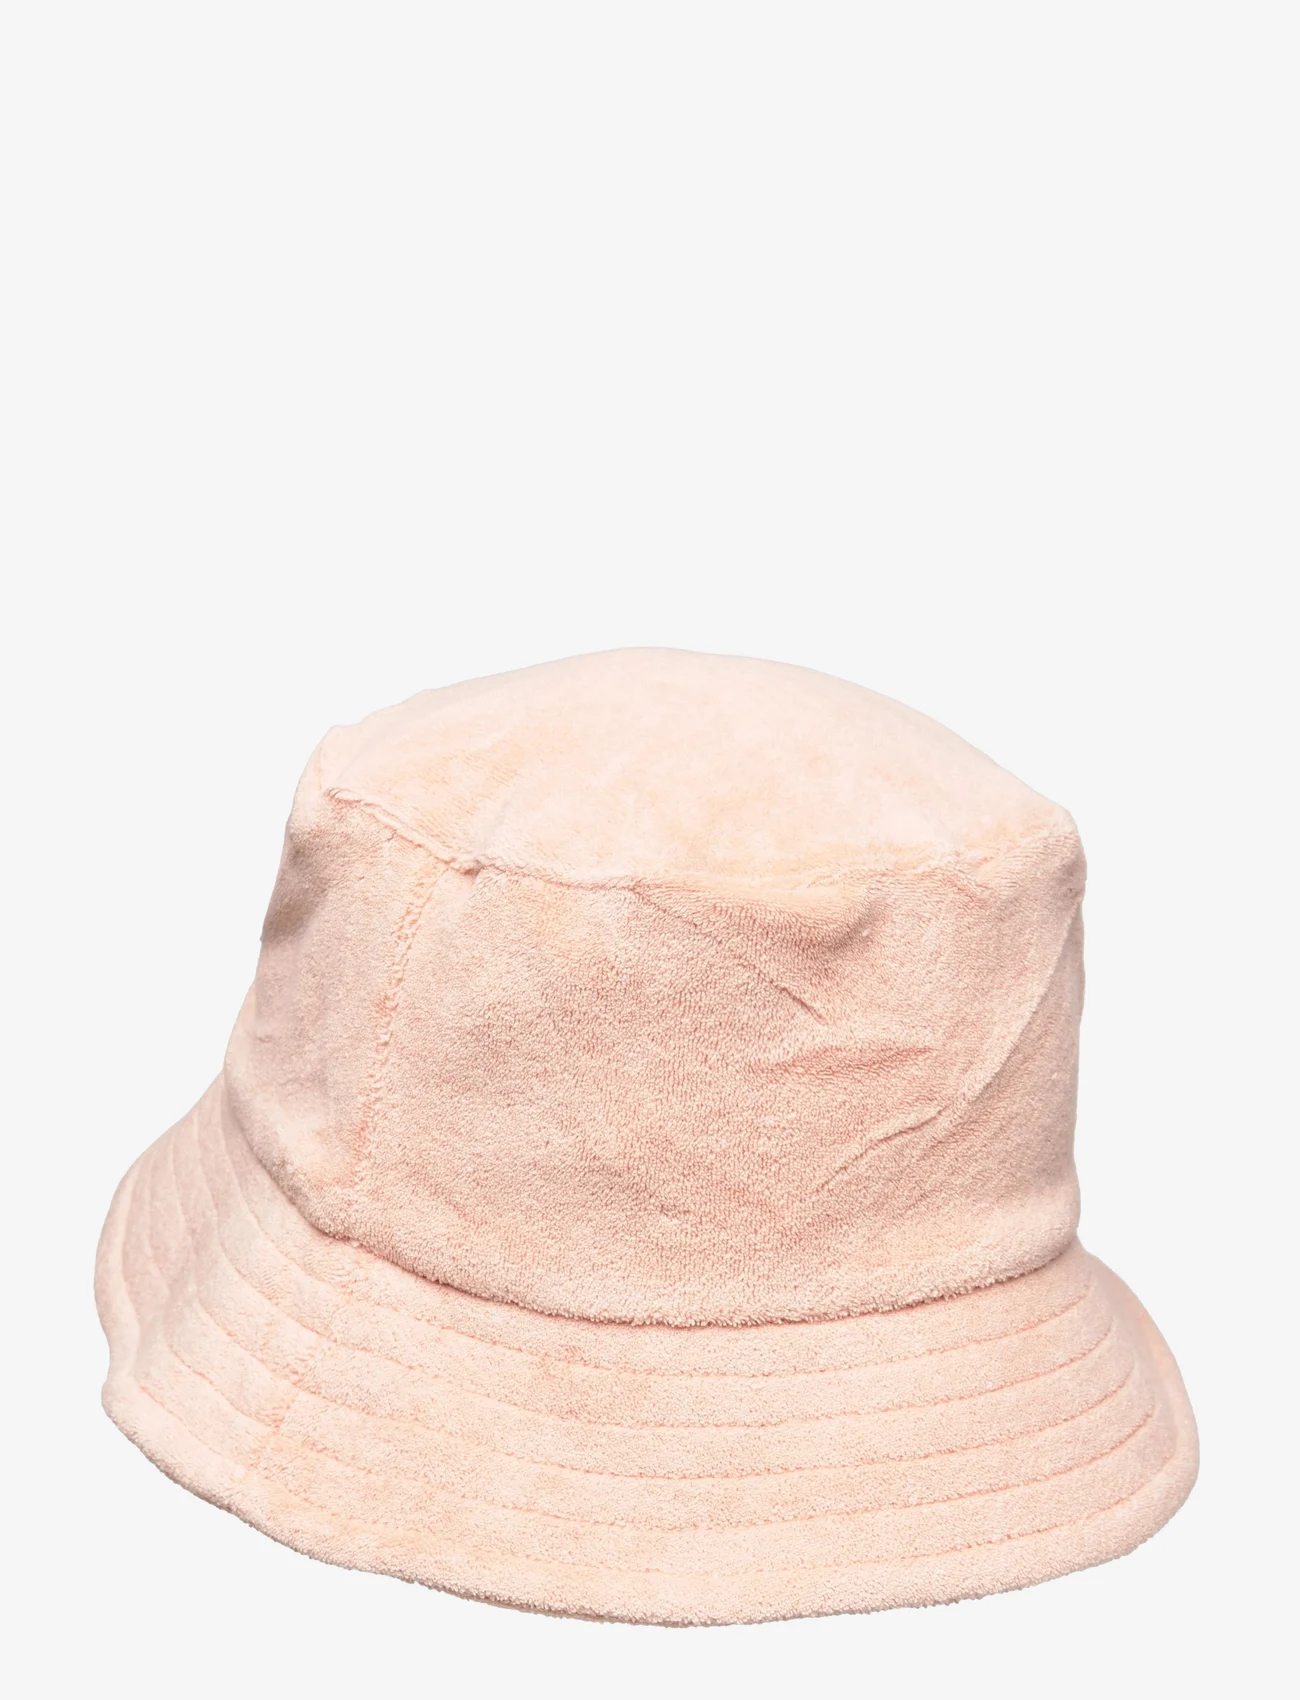 Rosemunde Kids - Bucket hat - zomerkoopjes - peachy rose - 1